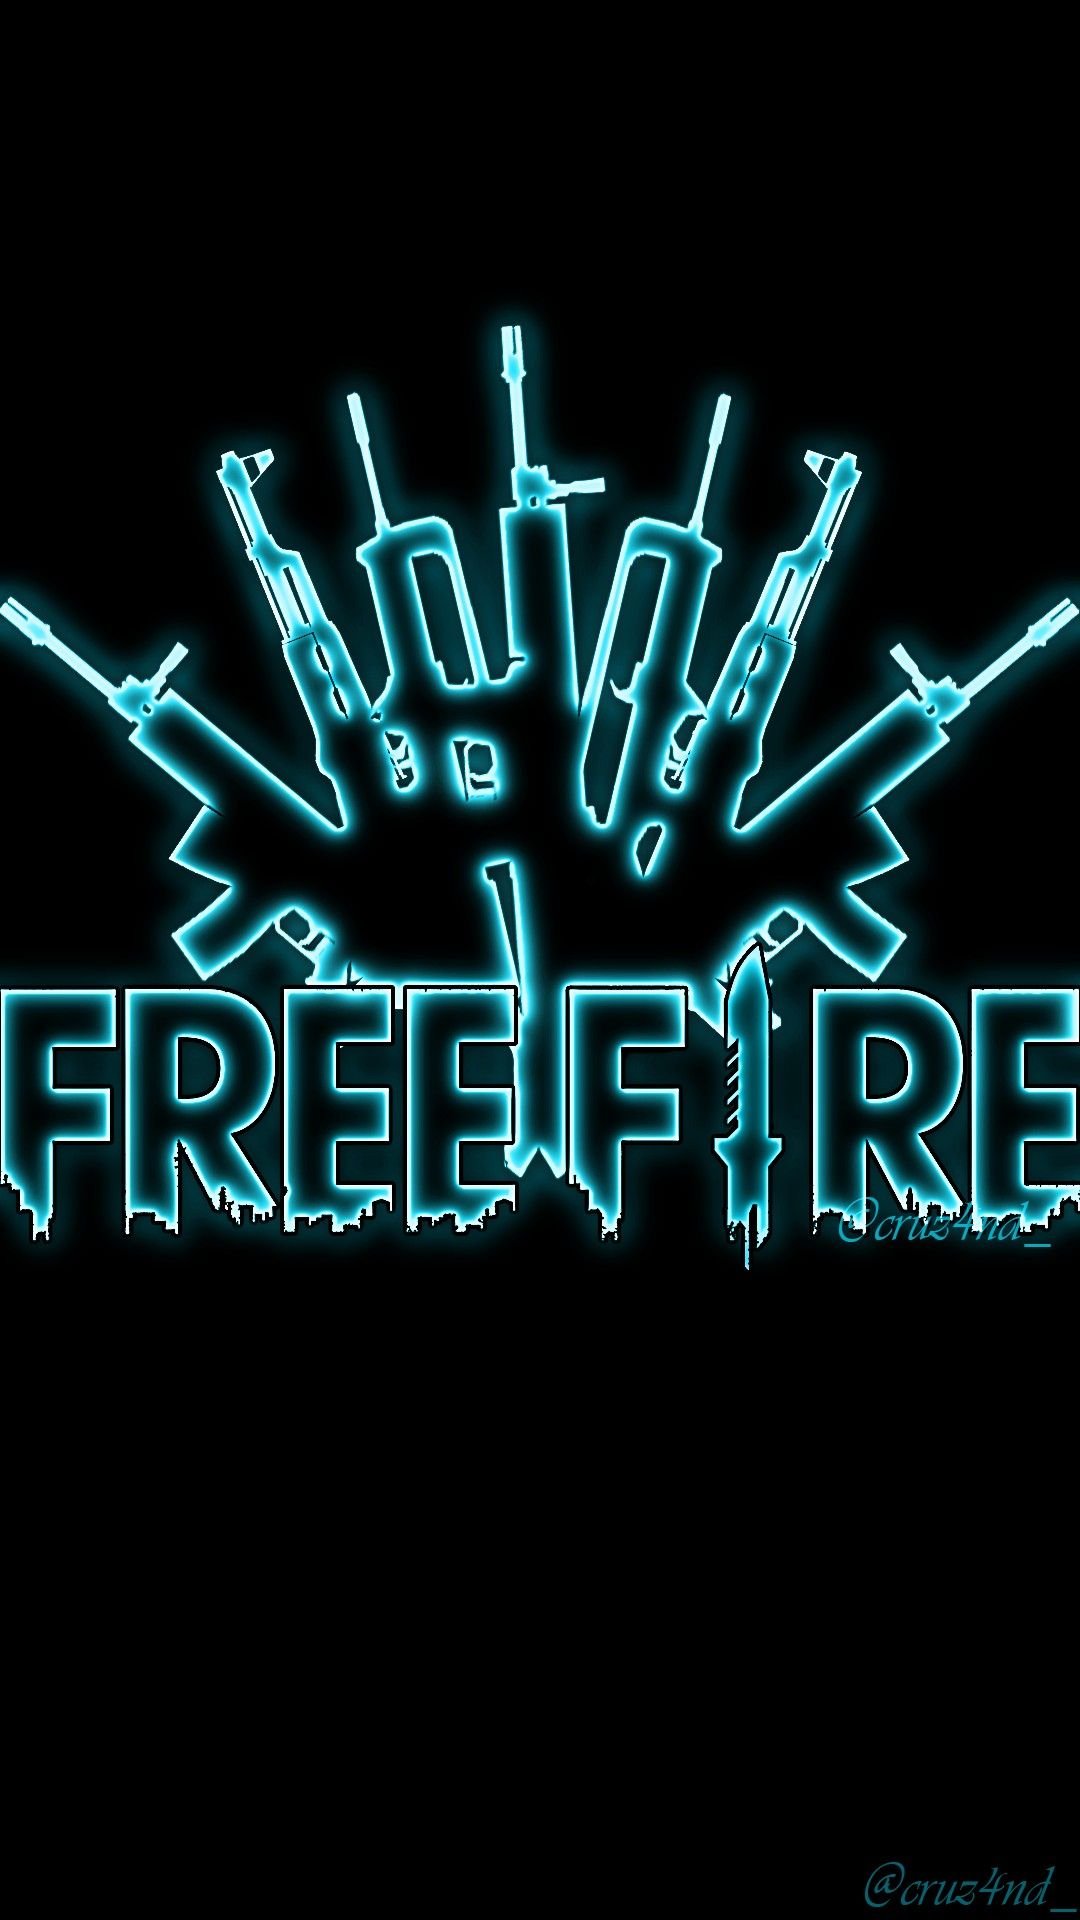 Jota - Garena Free Fire (Video Game) 4K wallpaper download